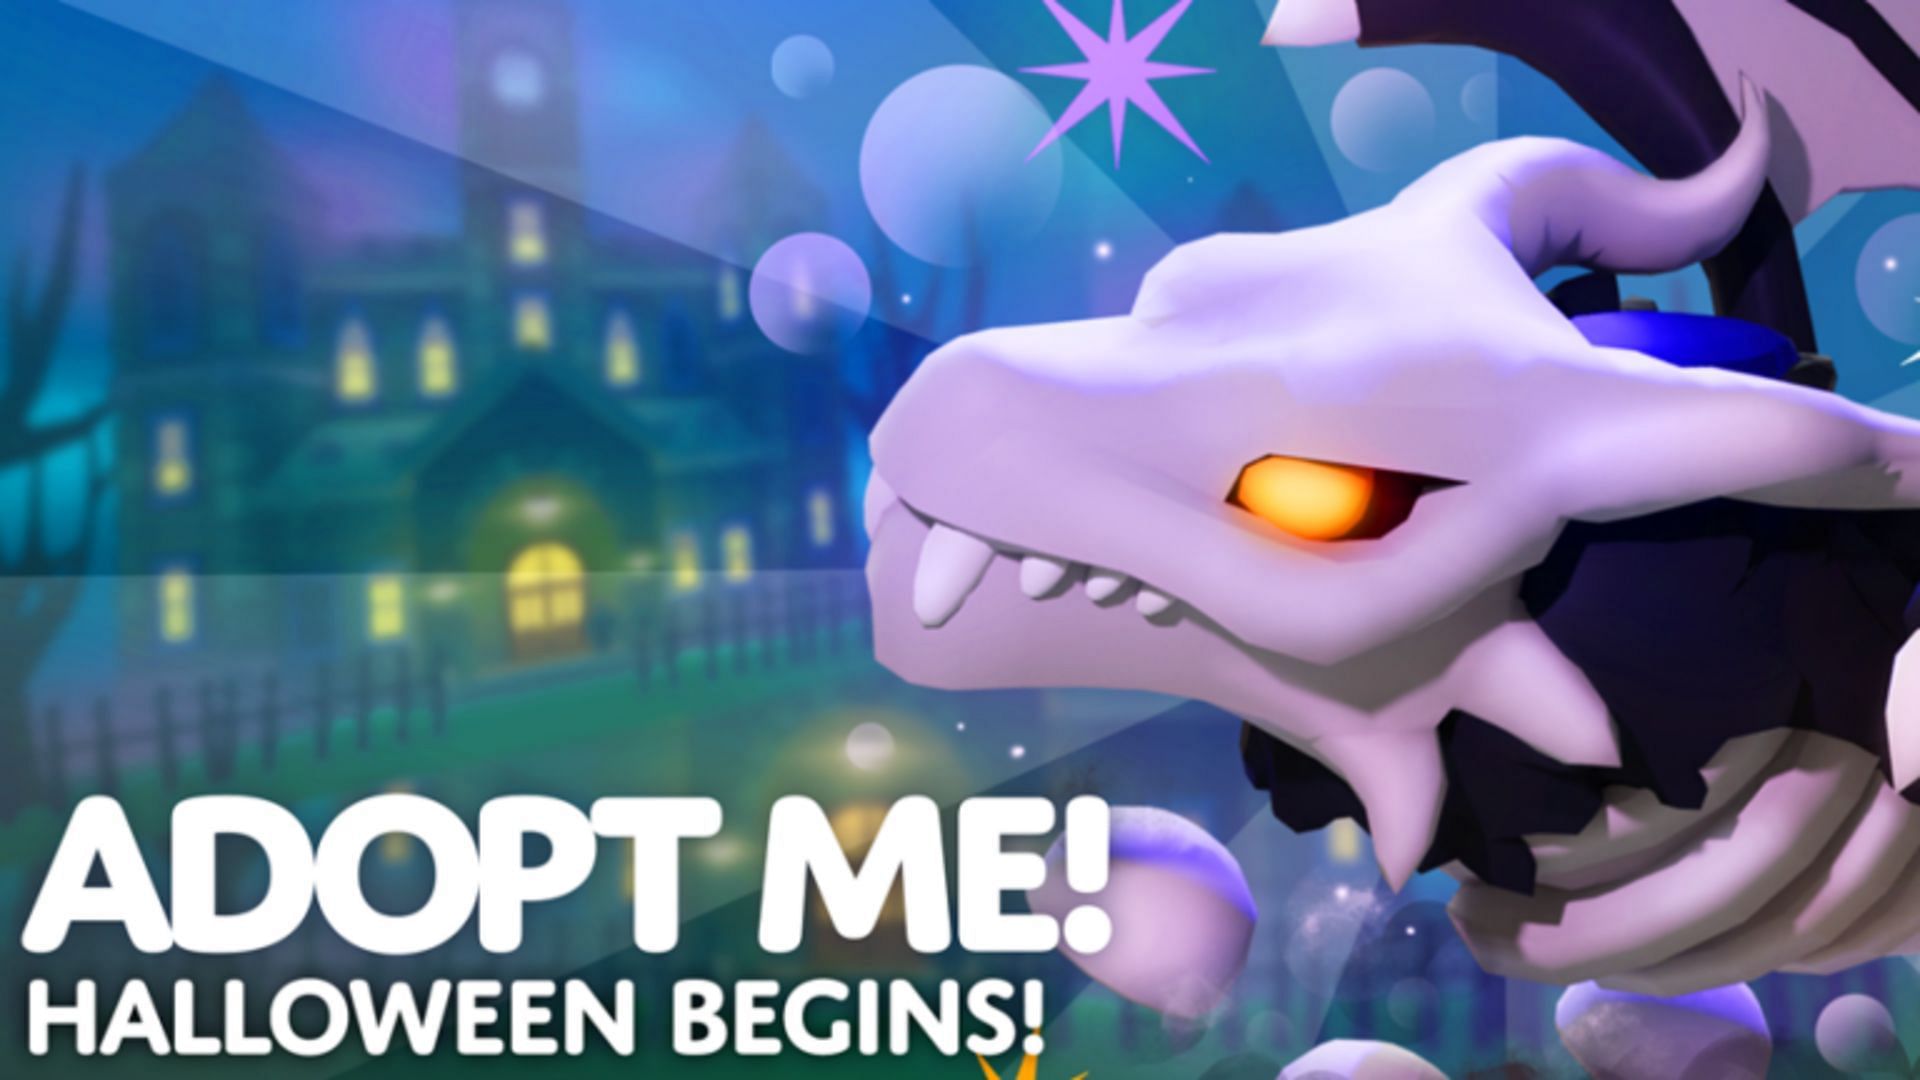 Adopt Me! Halloween event (Image via Adopt Me!/Roblox)